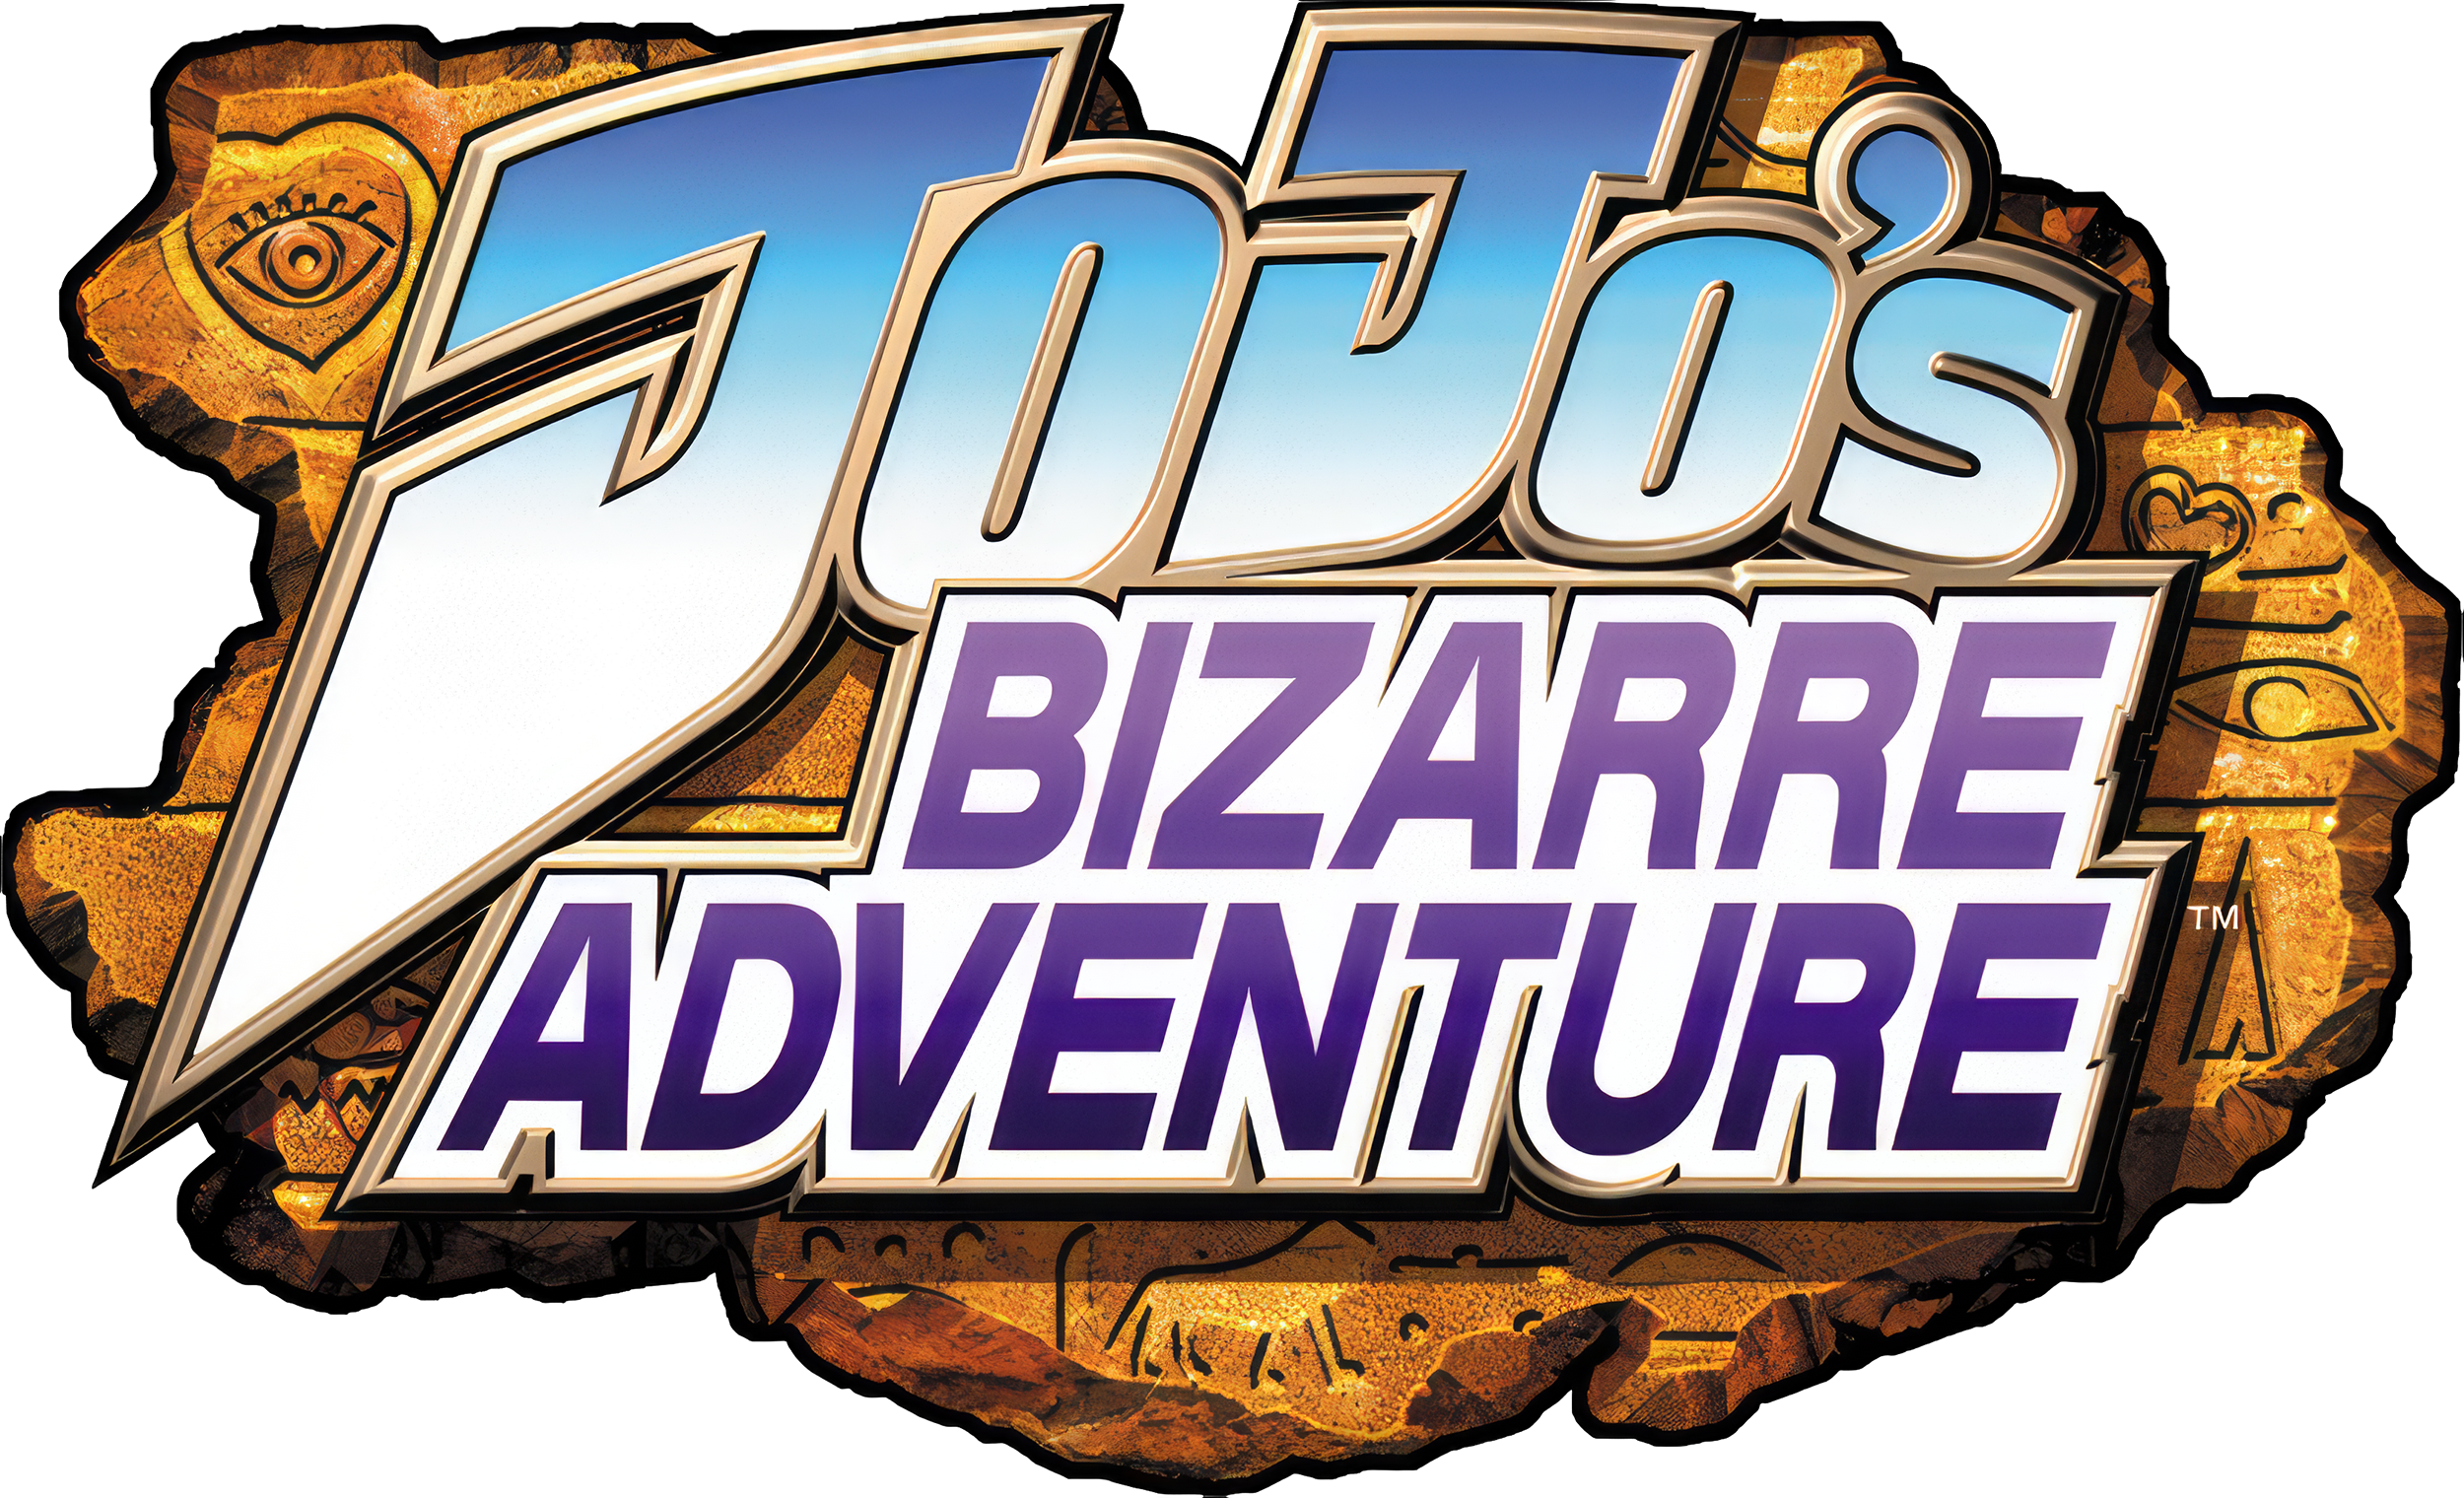 JoJo's Bizarre Adventure: Ultimate MUGEN HD Details - LaunchBox Games  Database